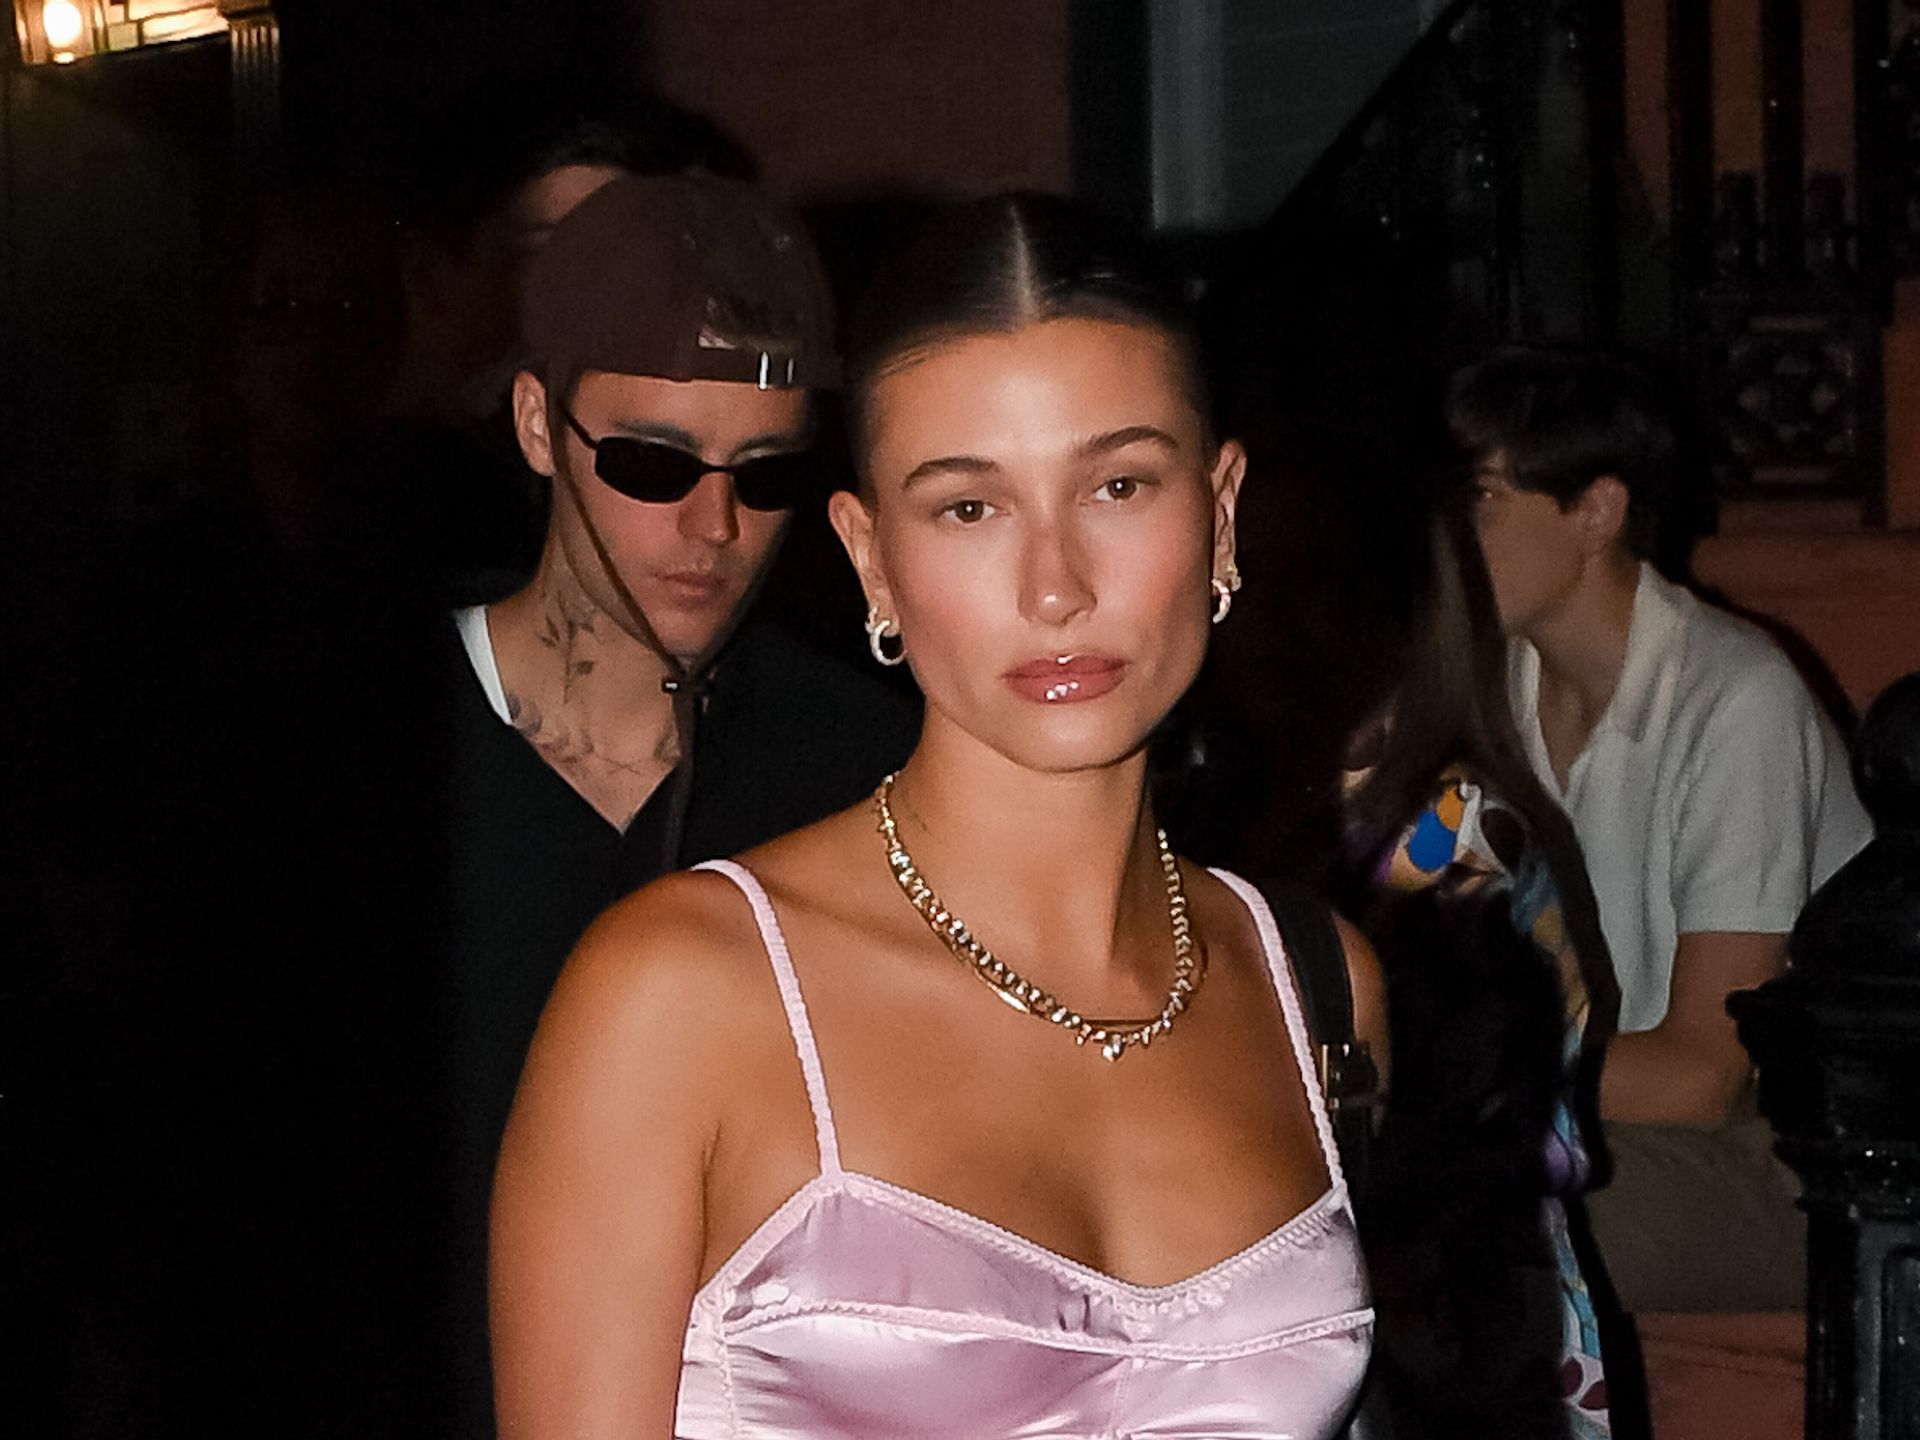 Hailey Bieber just gave the 90s slip dress a quiet luxury makeover